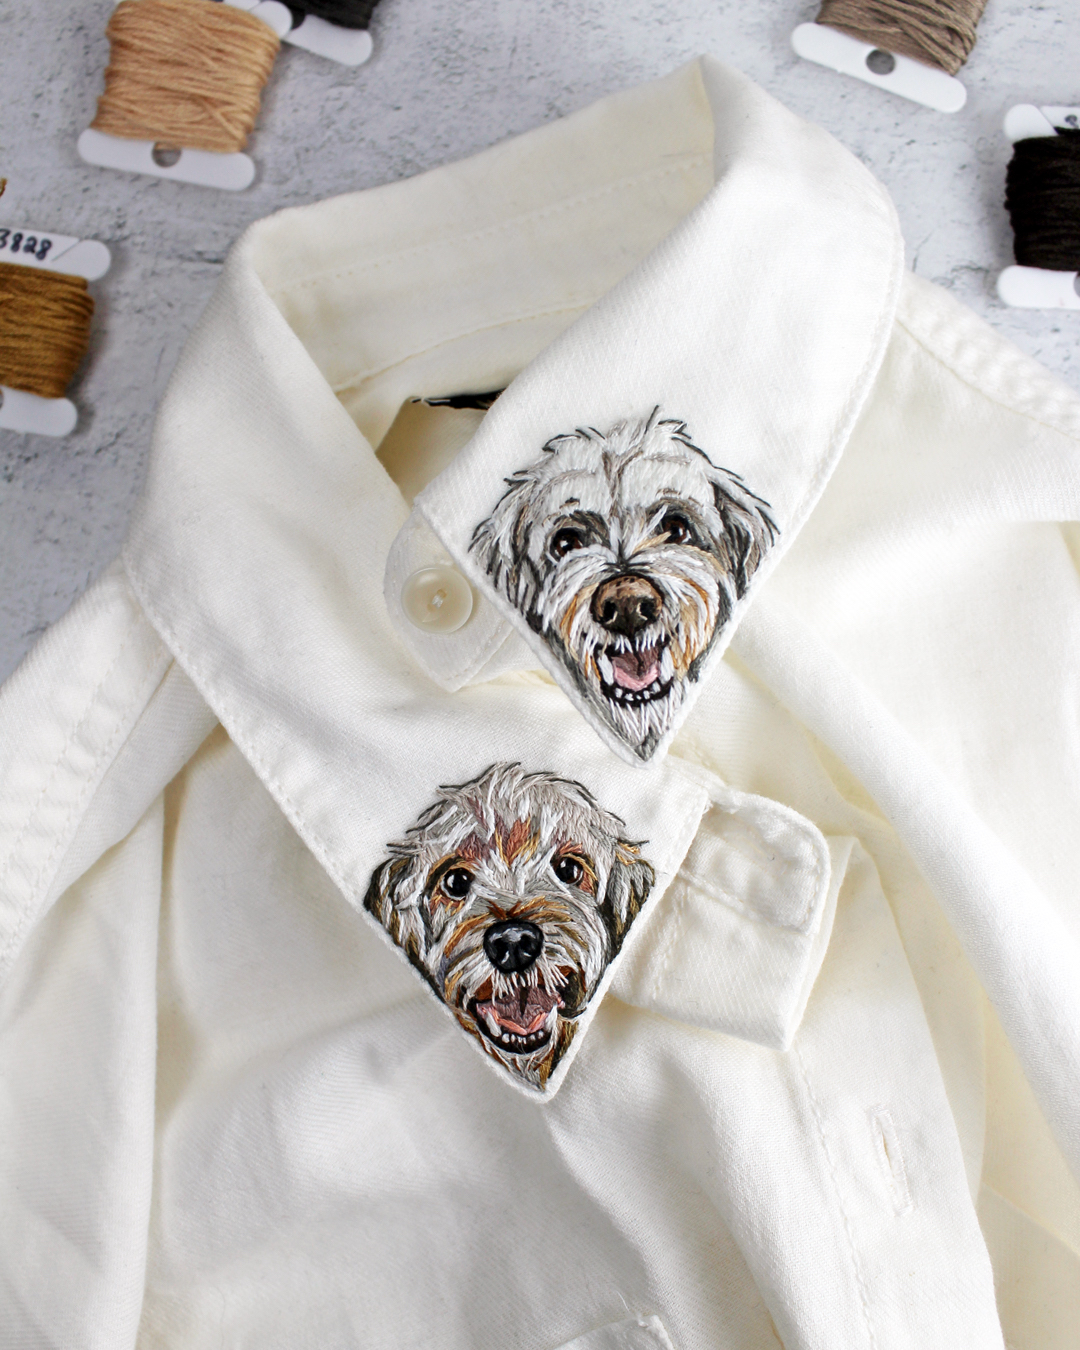 Custom Dog Embroidery on a Shirt